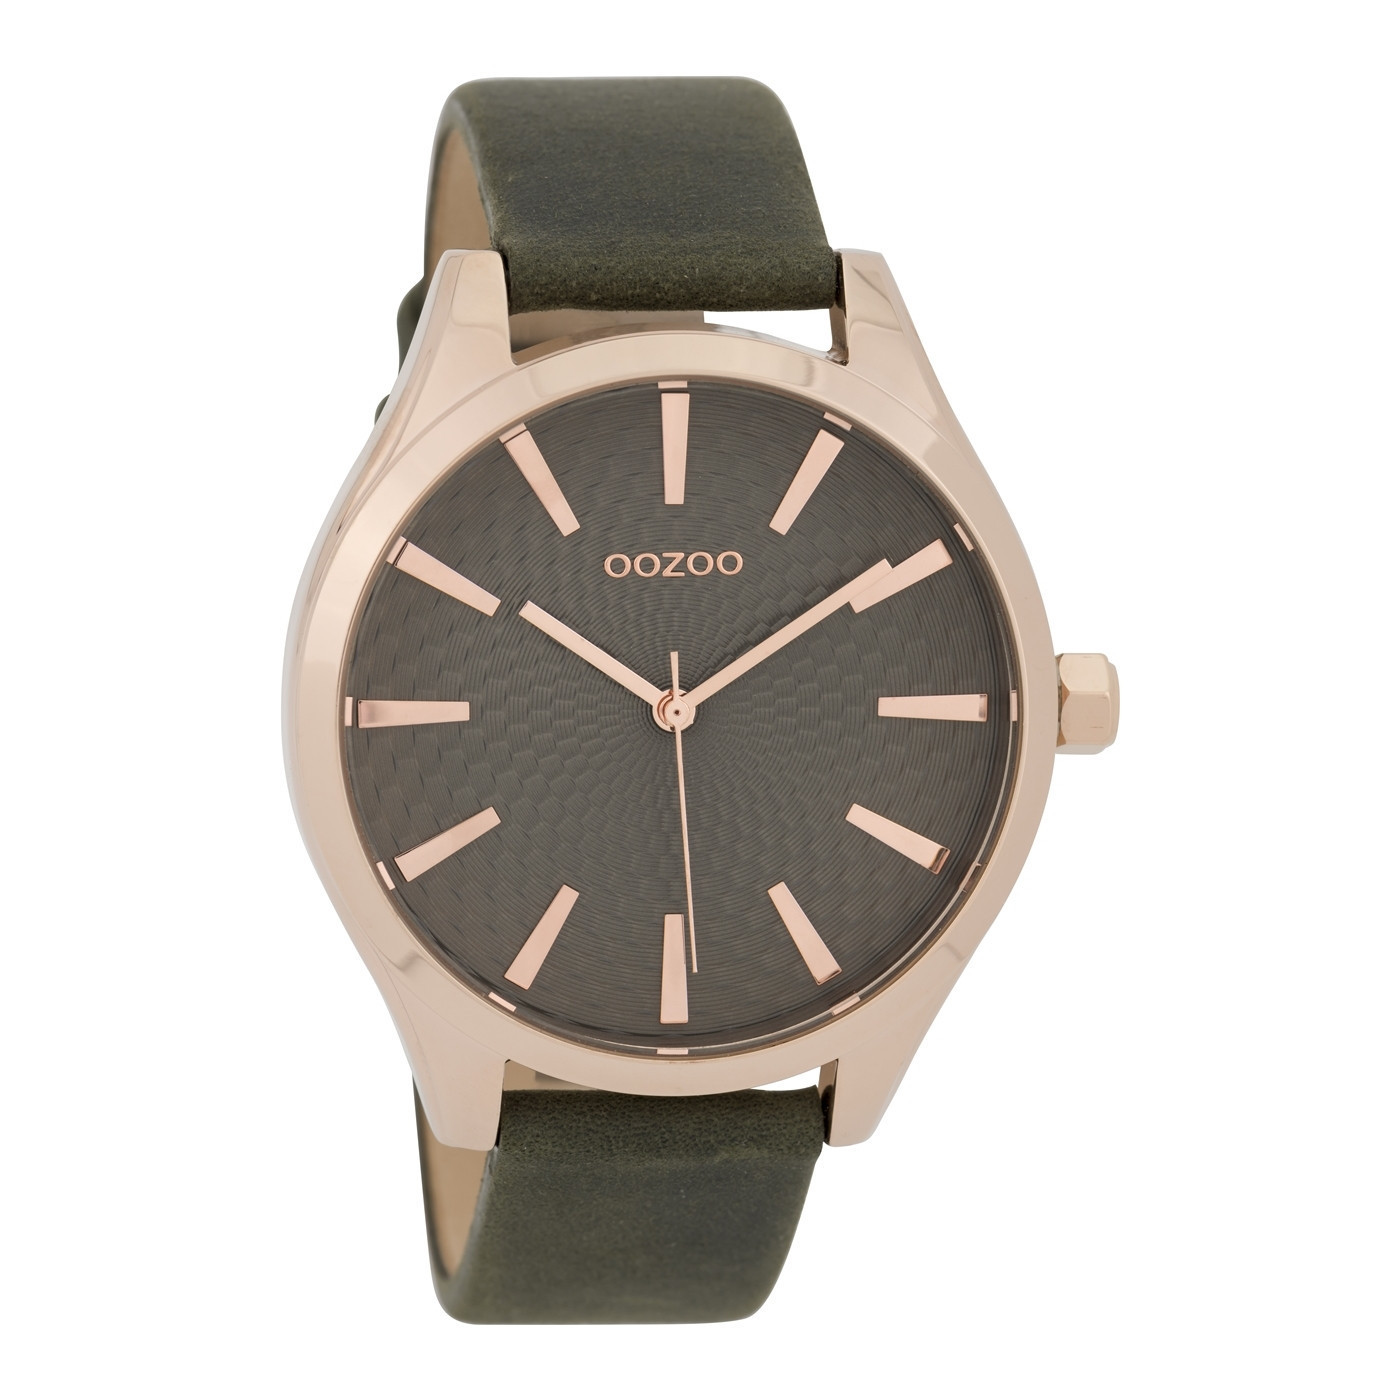 OOZOO Horloge Timepieces Collection staal/leder rosekleurig-donkergrijs C9688 1